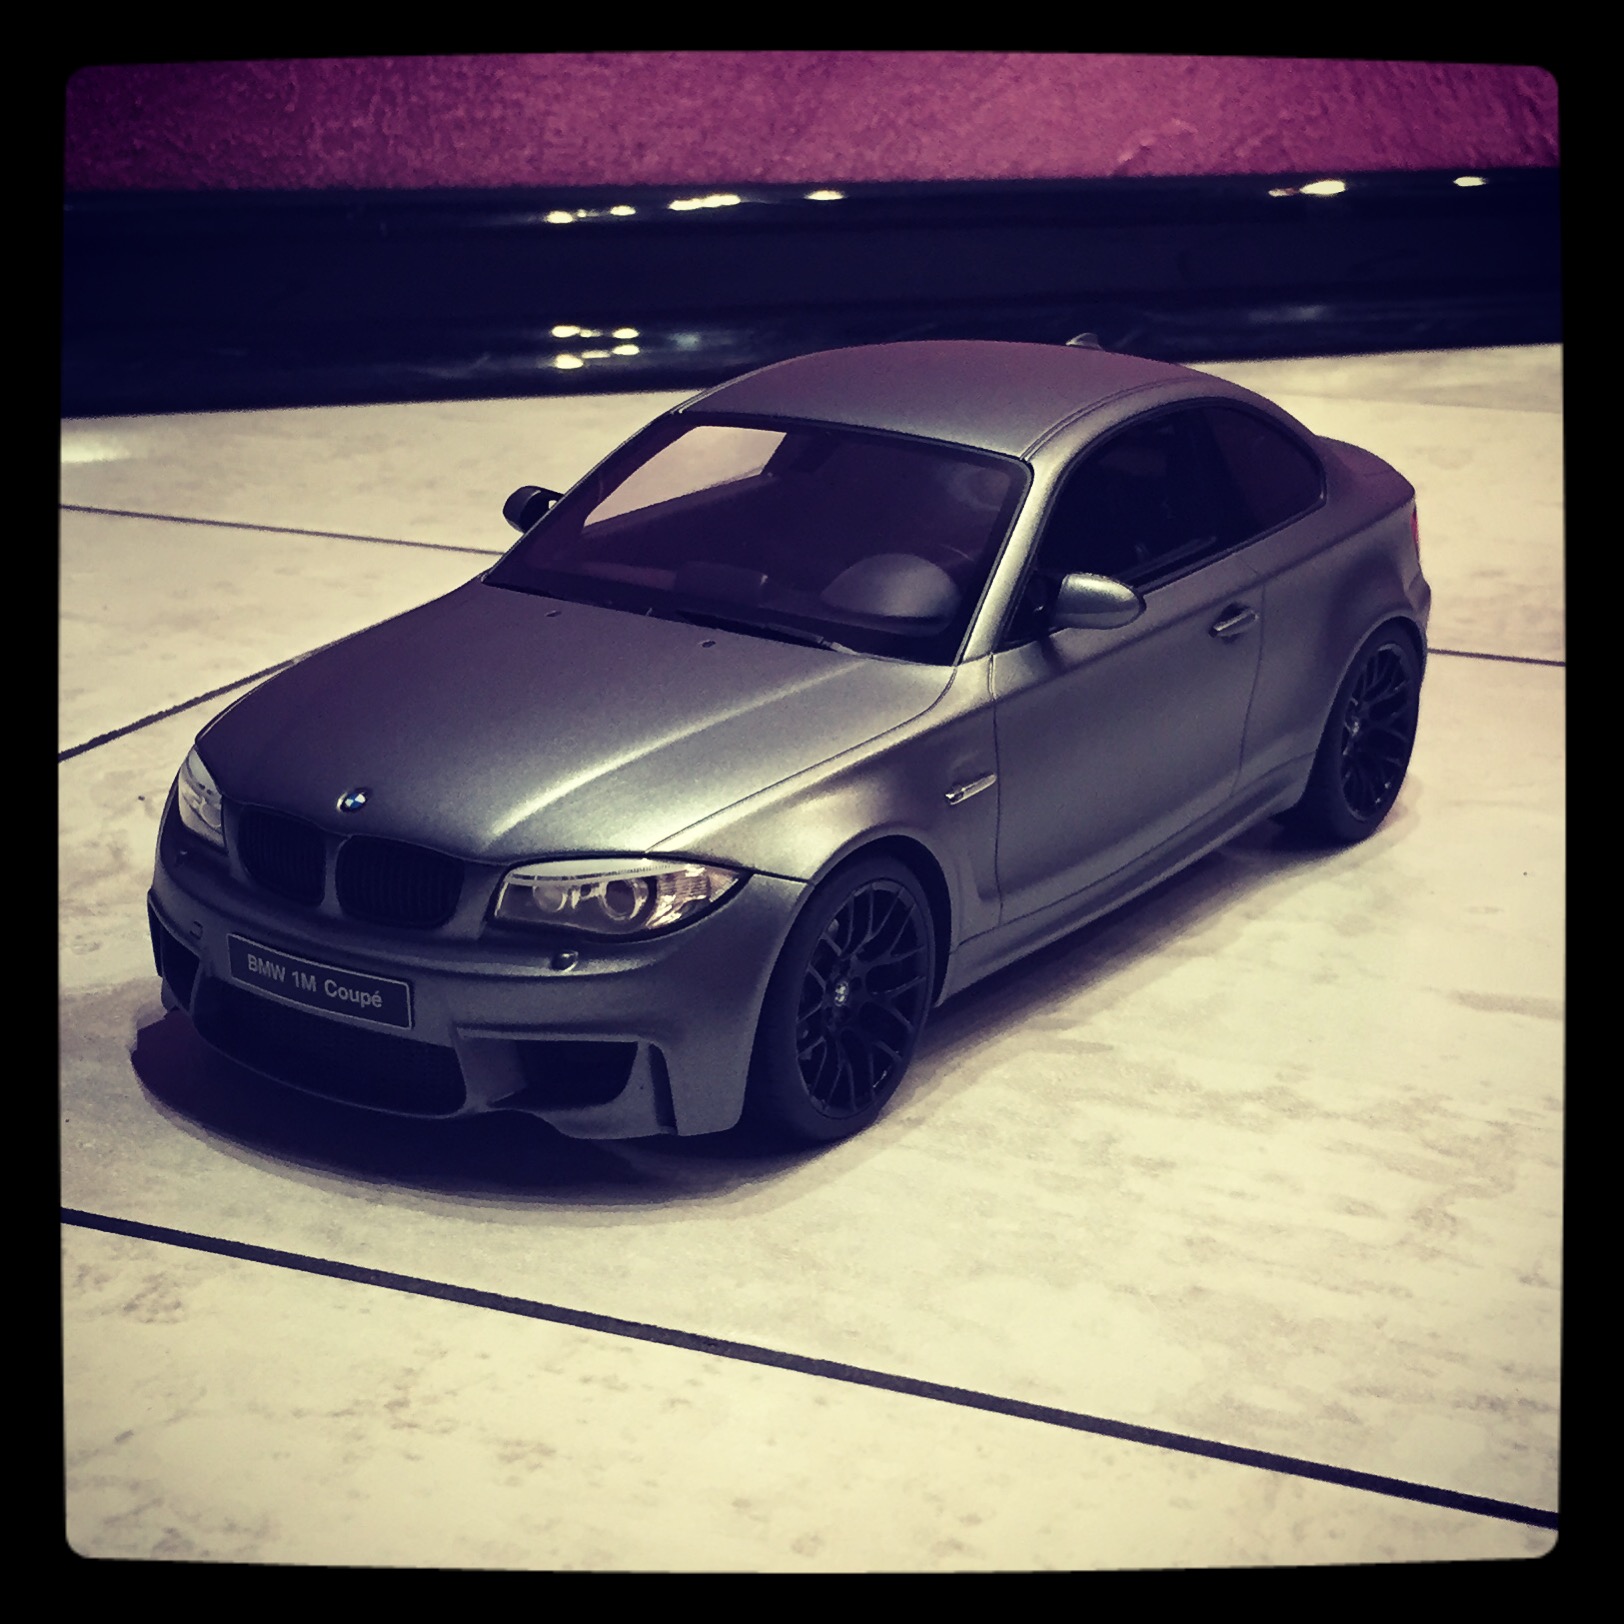 BMW 1M (E82) grey, le 0466 of 1,000pcs. (gt spirit)